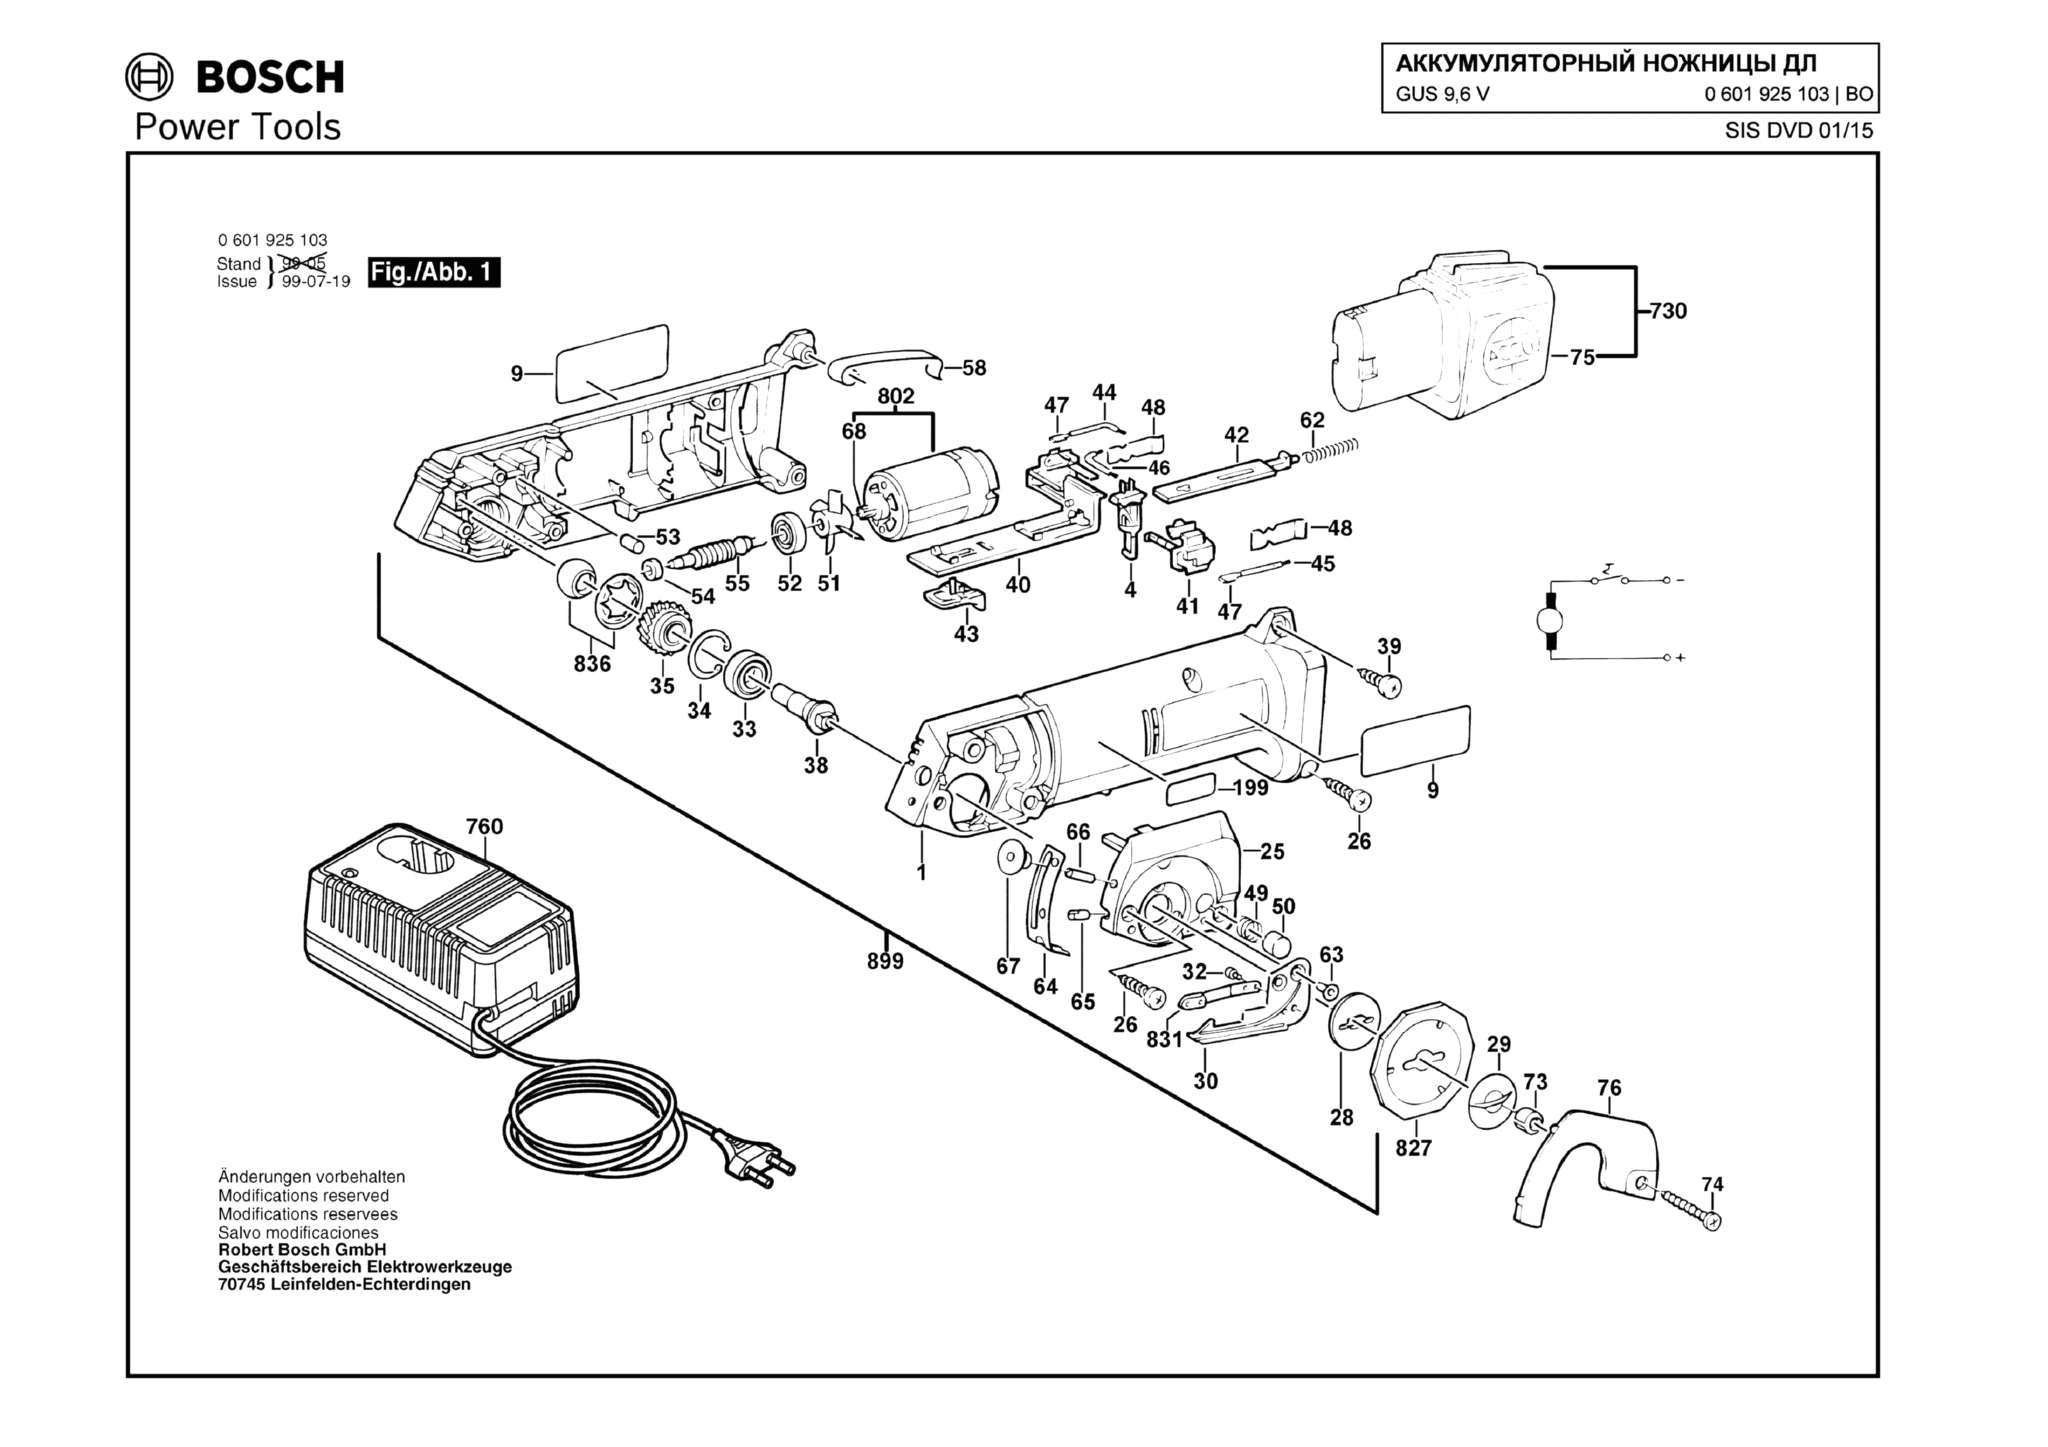 Запчасти, схема и деталировка Bosch GUS 9,6 V (ТИП 0601925103)